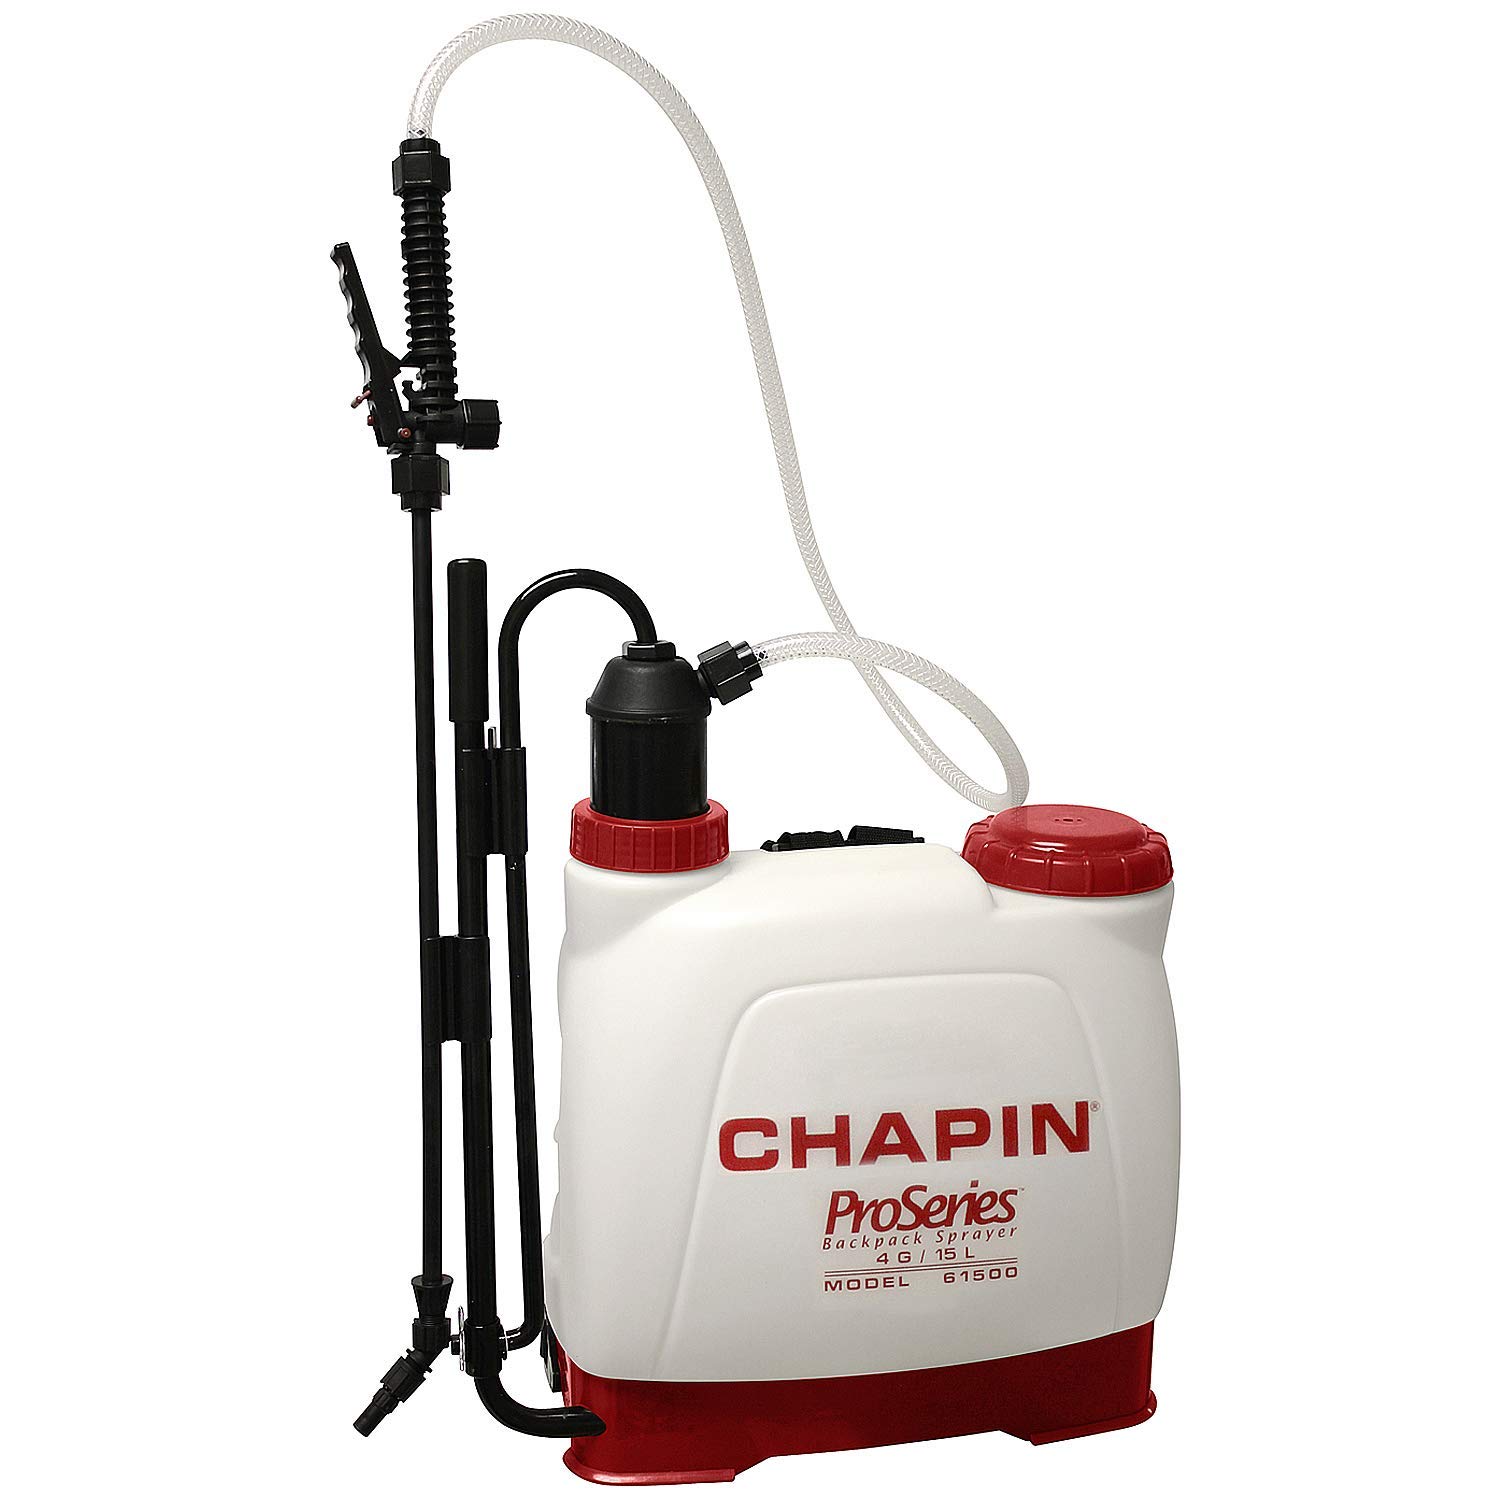 Chapin International 61500 Style Backpack Sprayer